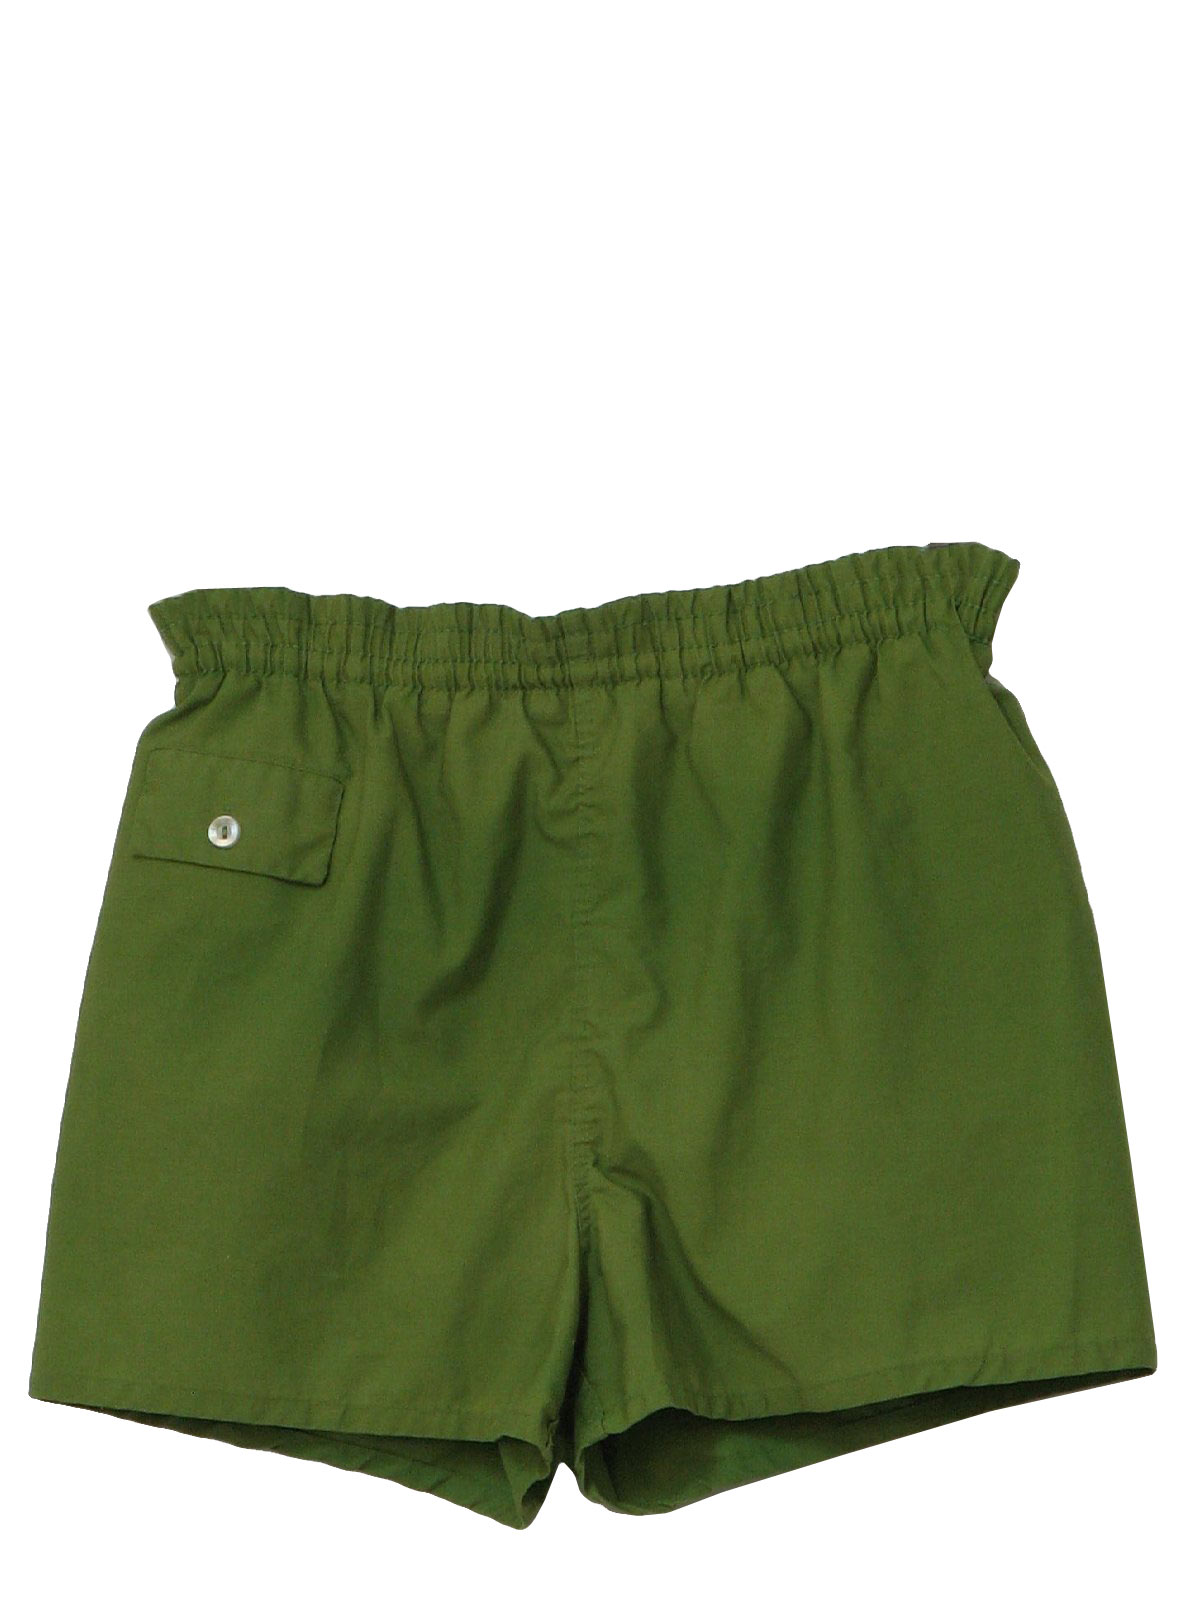 Vintage 60's Swimsuit/Swimwear: 60s -No Label- Mens light olive green ...